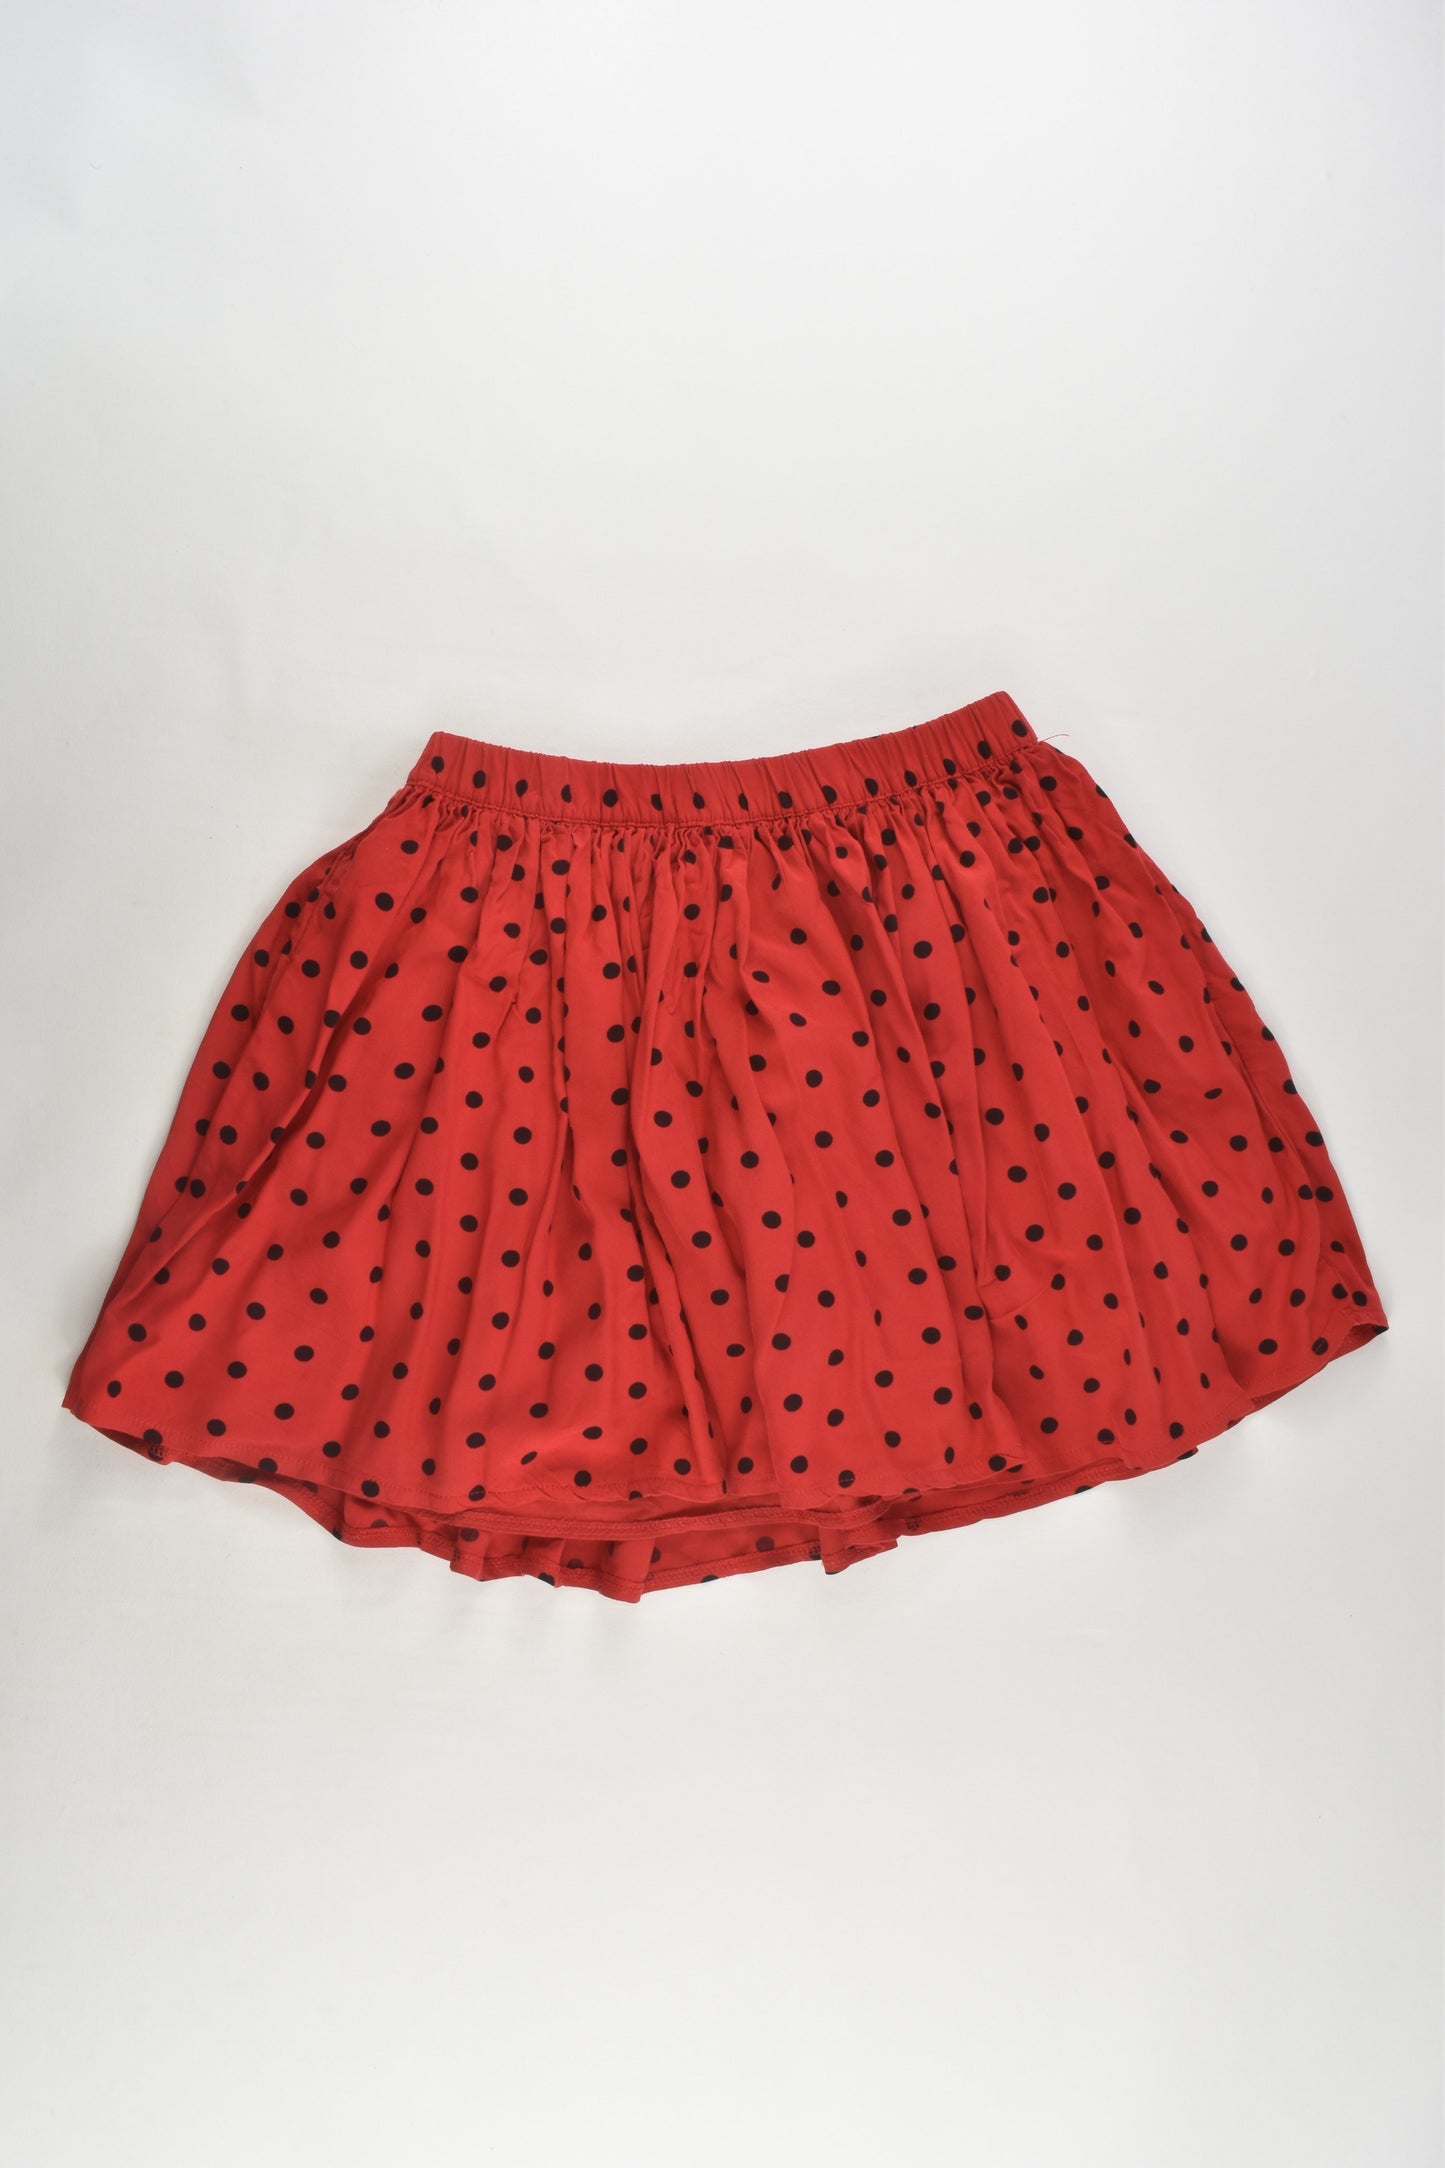 Gap Kids Size 8 (M) Lined Polka Dots Skirt